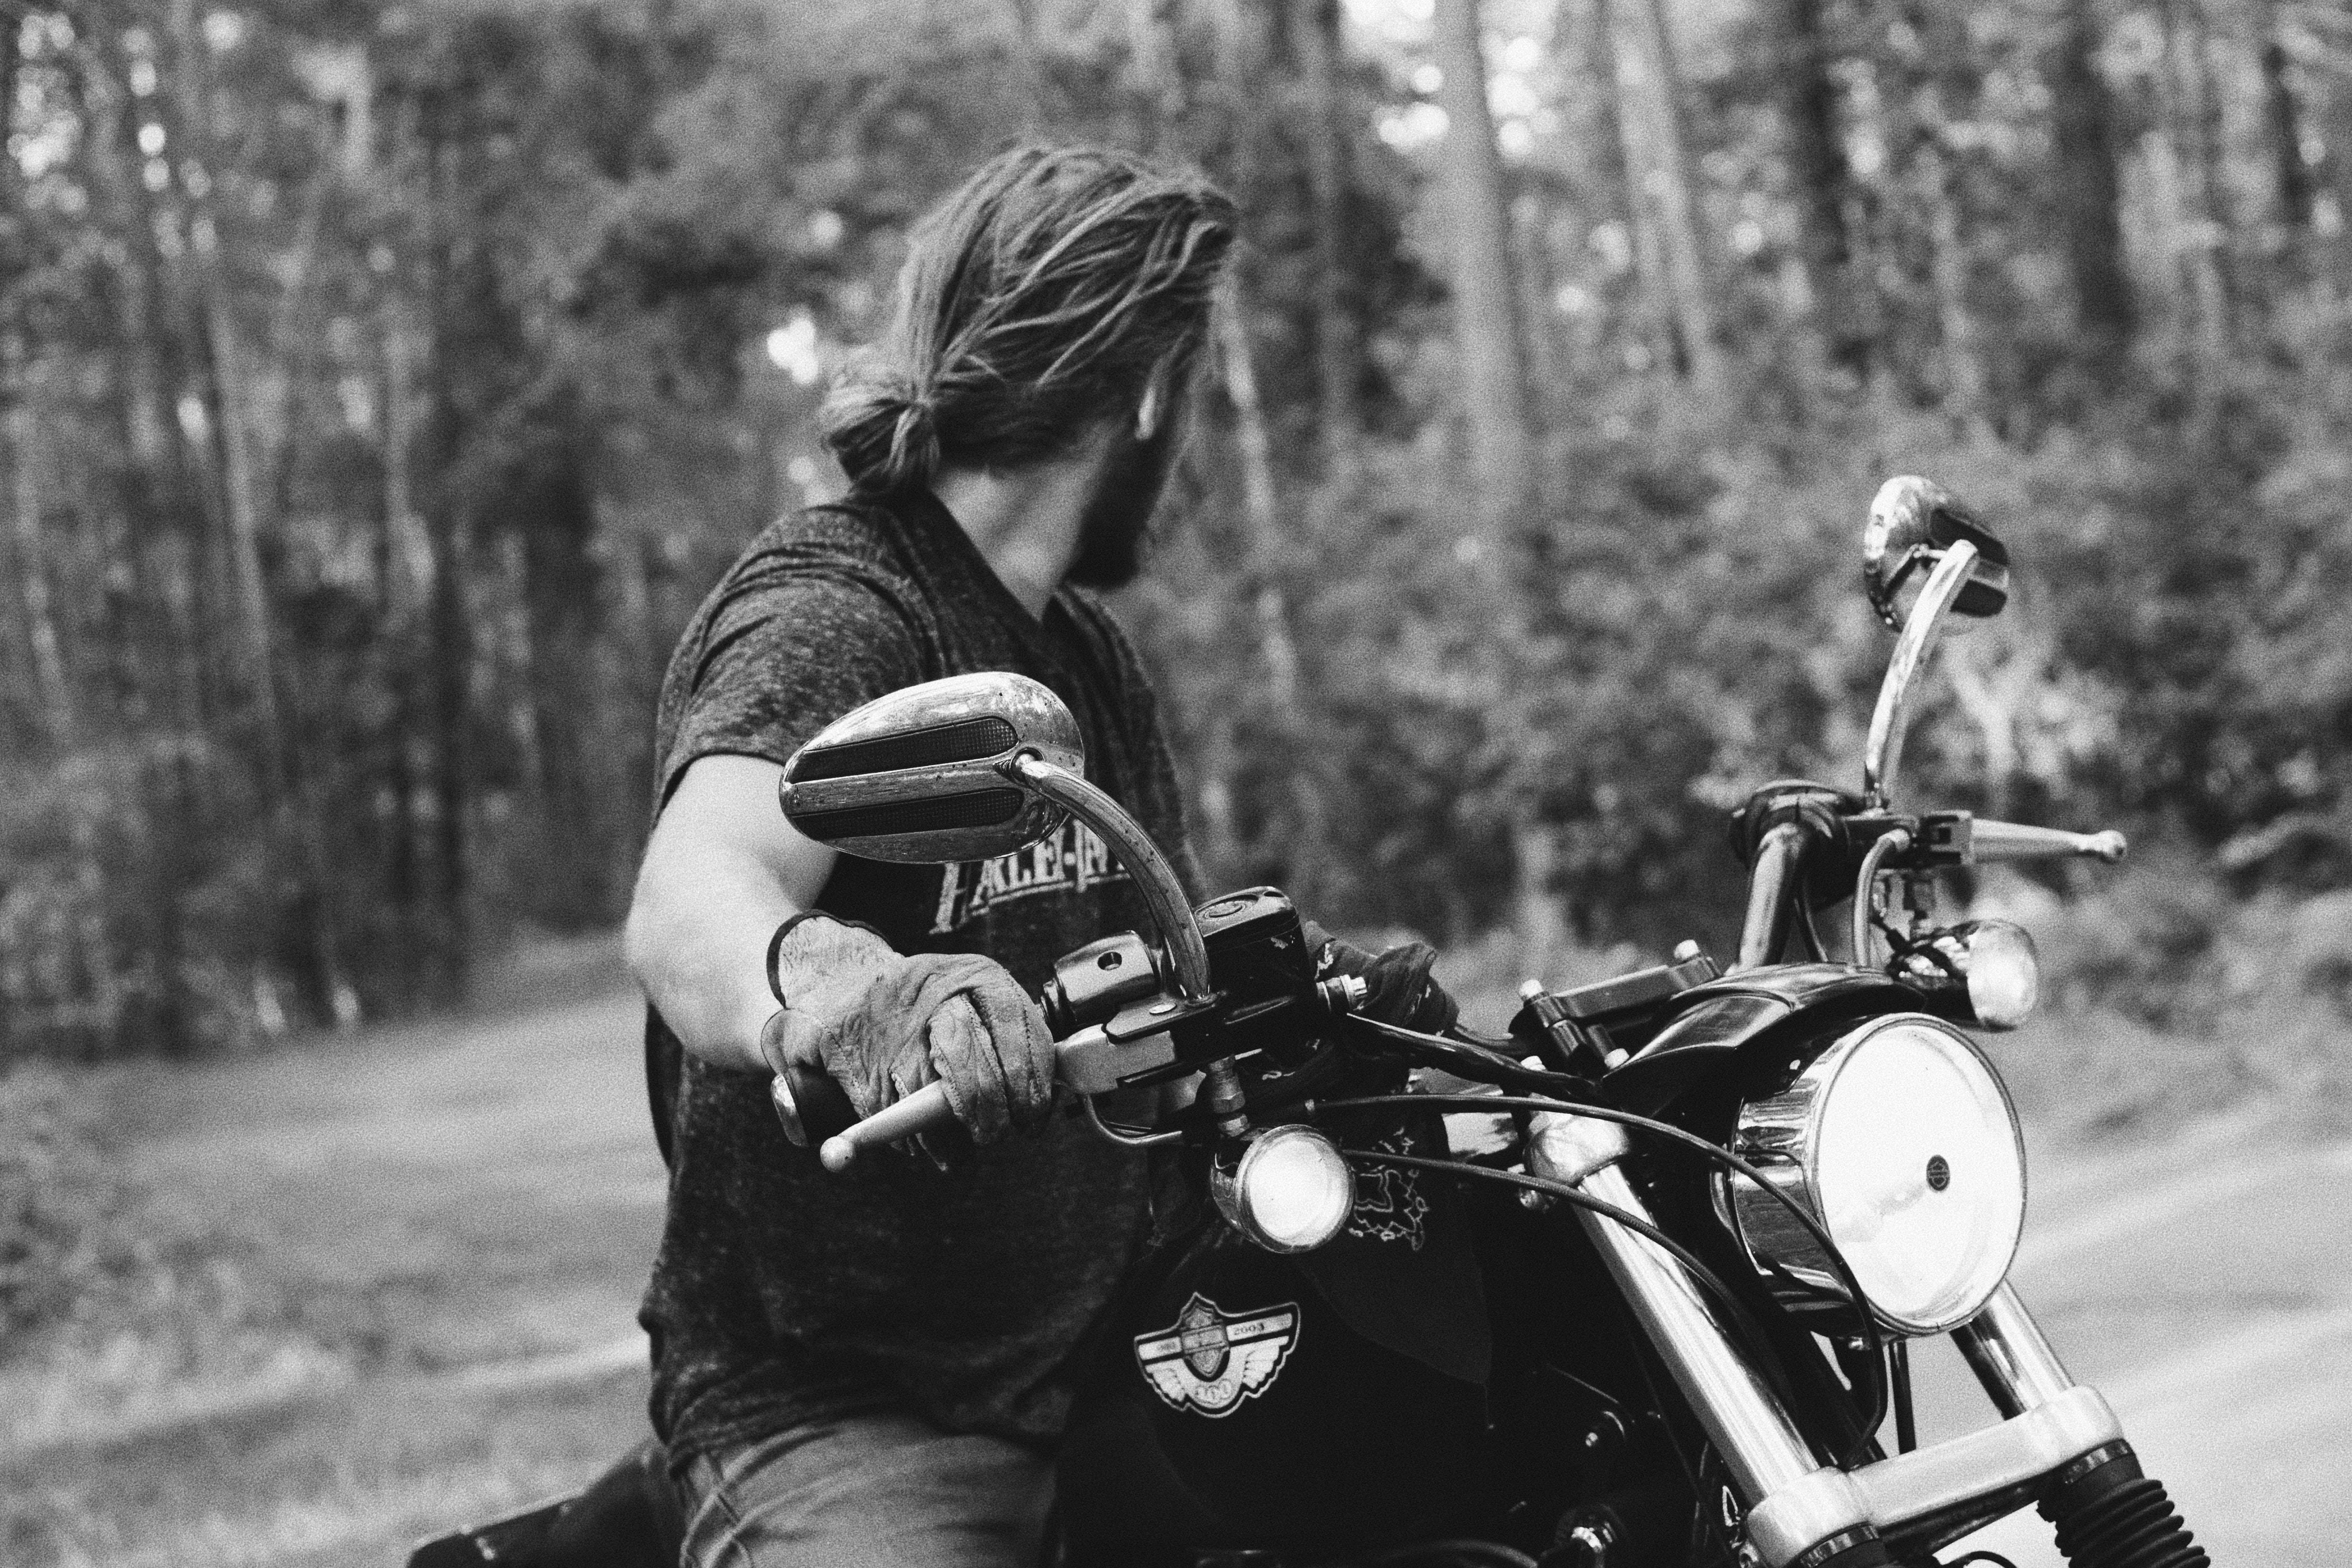  Motor Hintergrundbild 4897x3265. Download Motorcycle Man Aesthetic Wallpaper